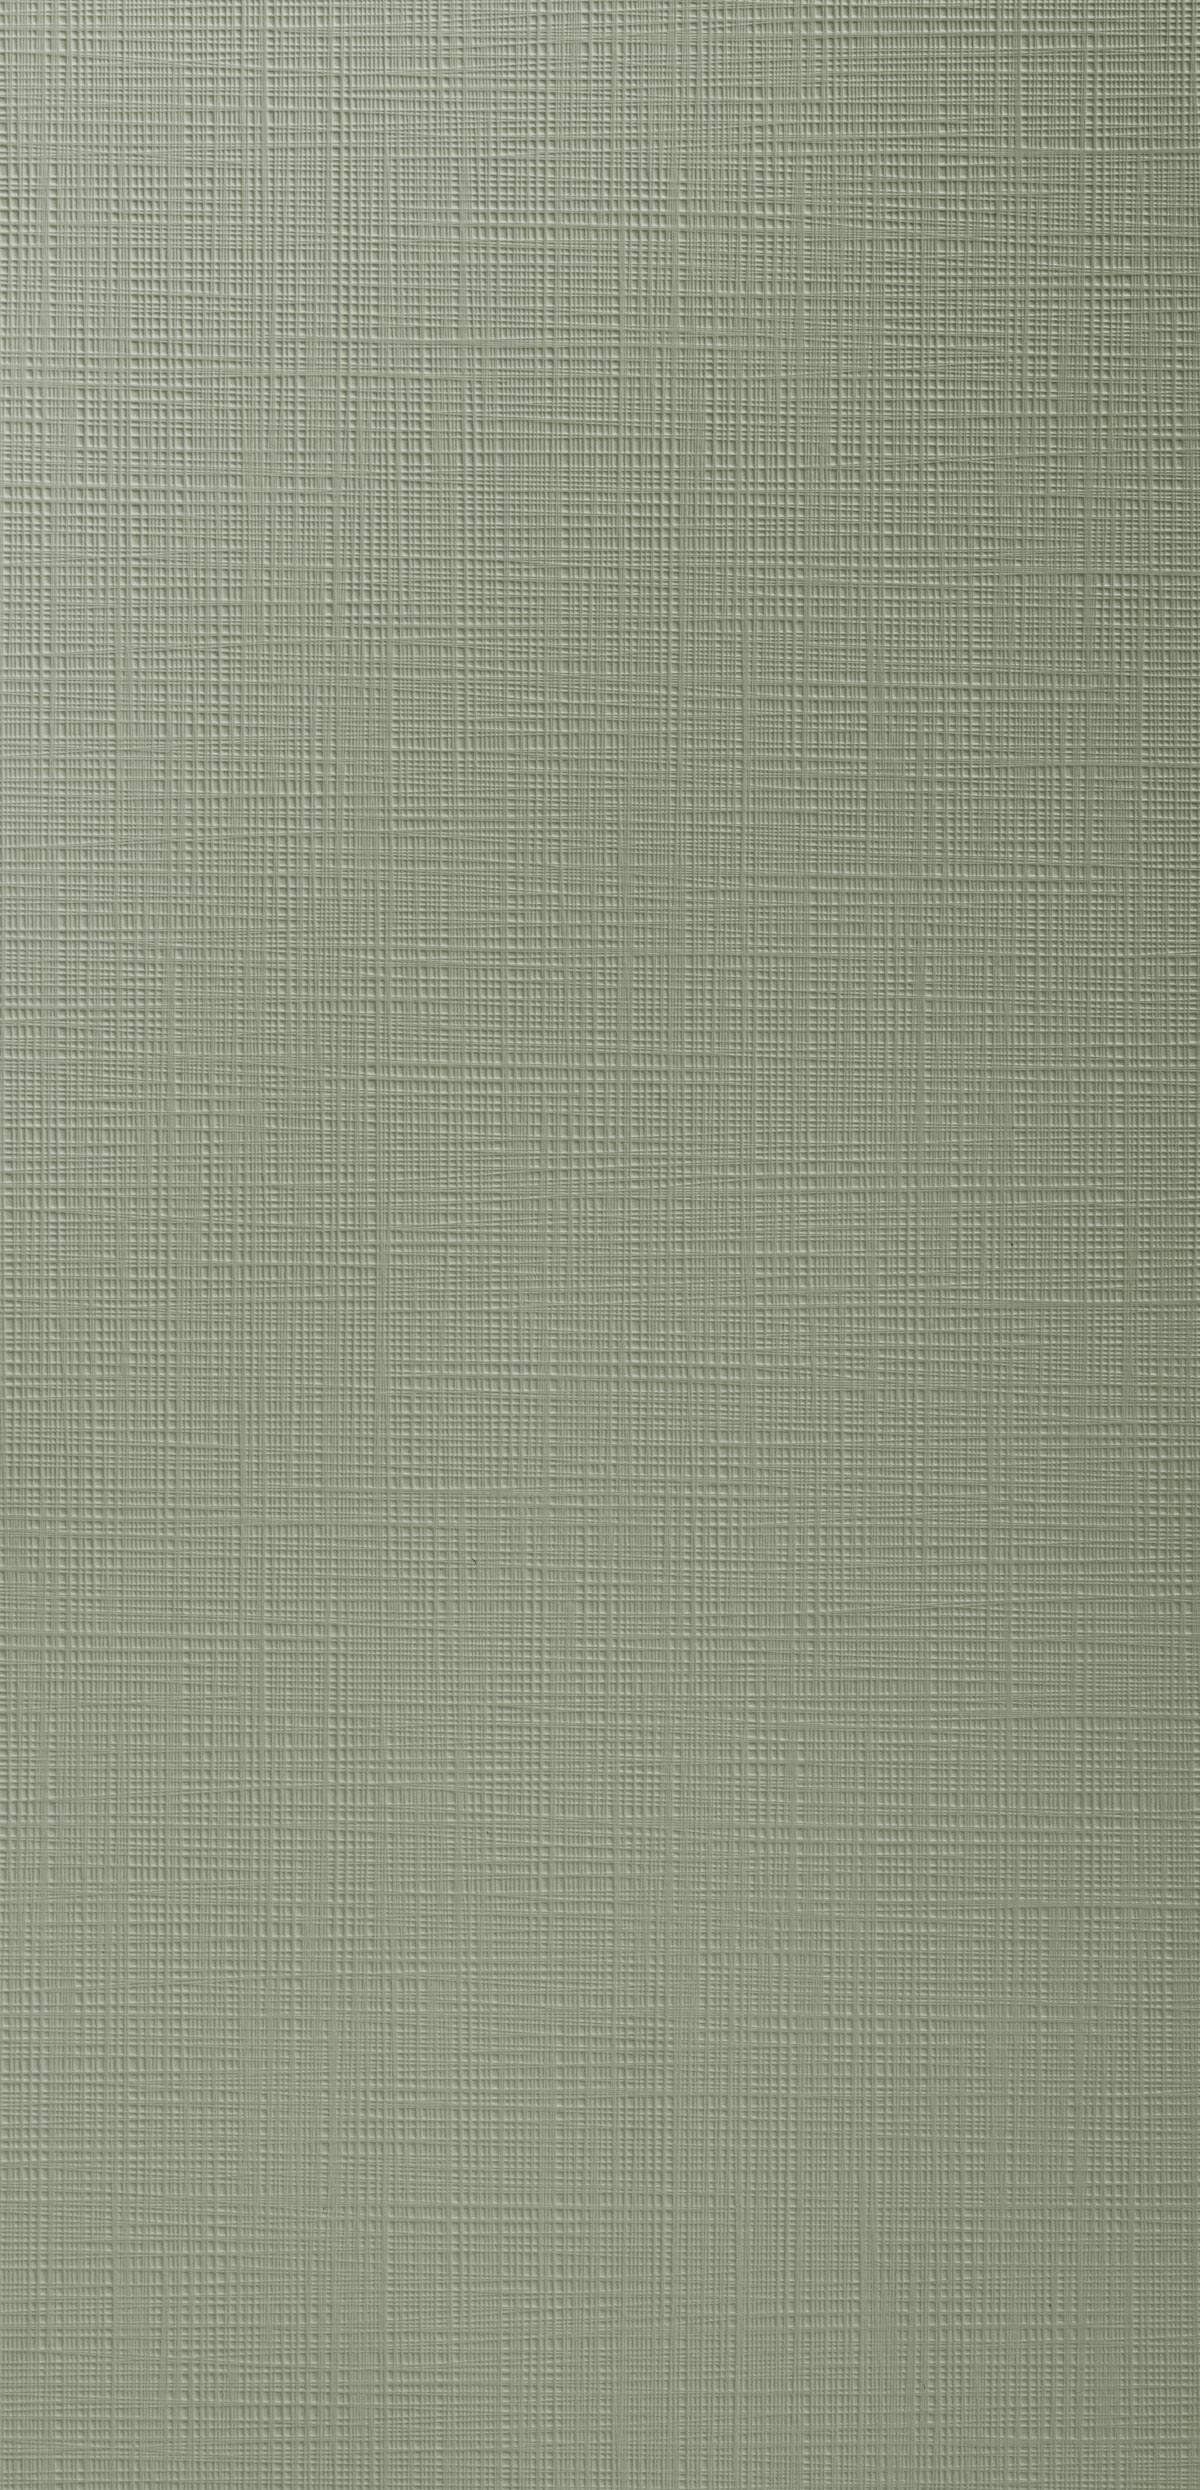 Fibra Pale green 018-panel